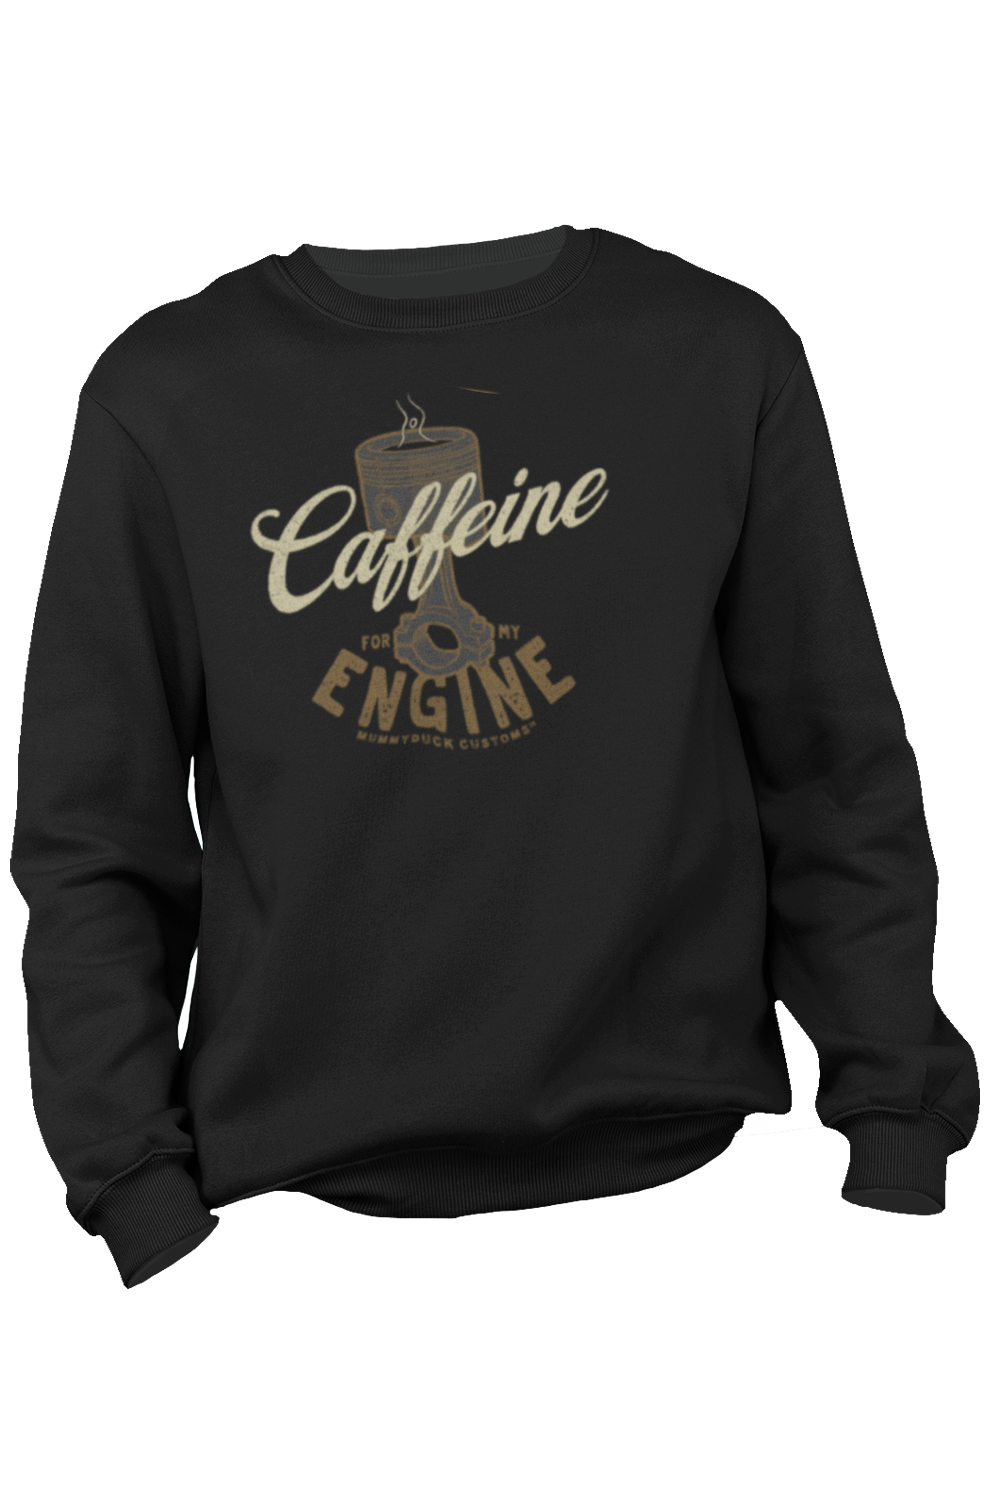 Caffeine engine motorcycle sweatshirt